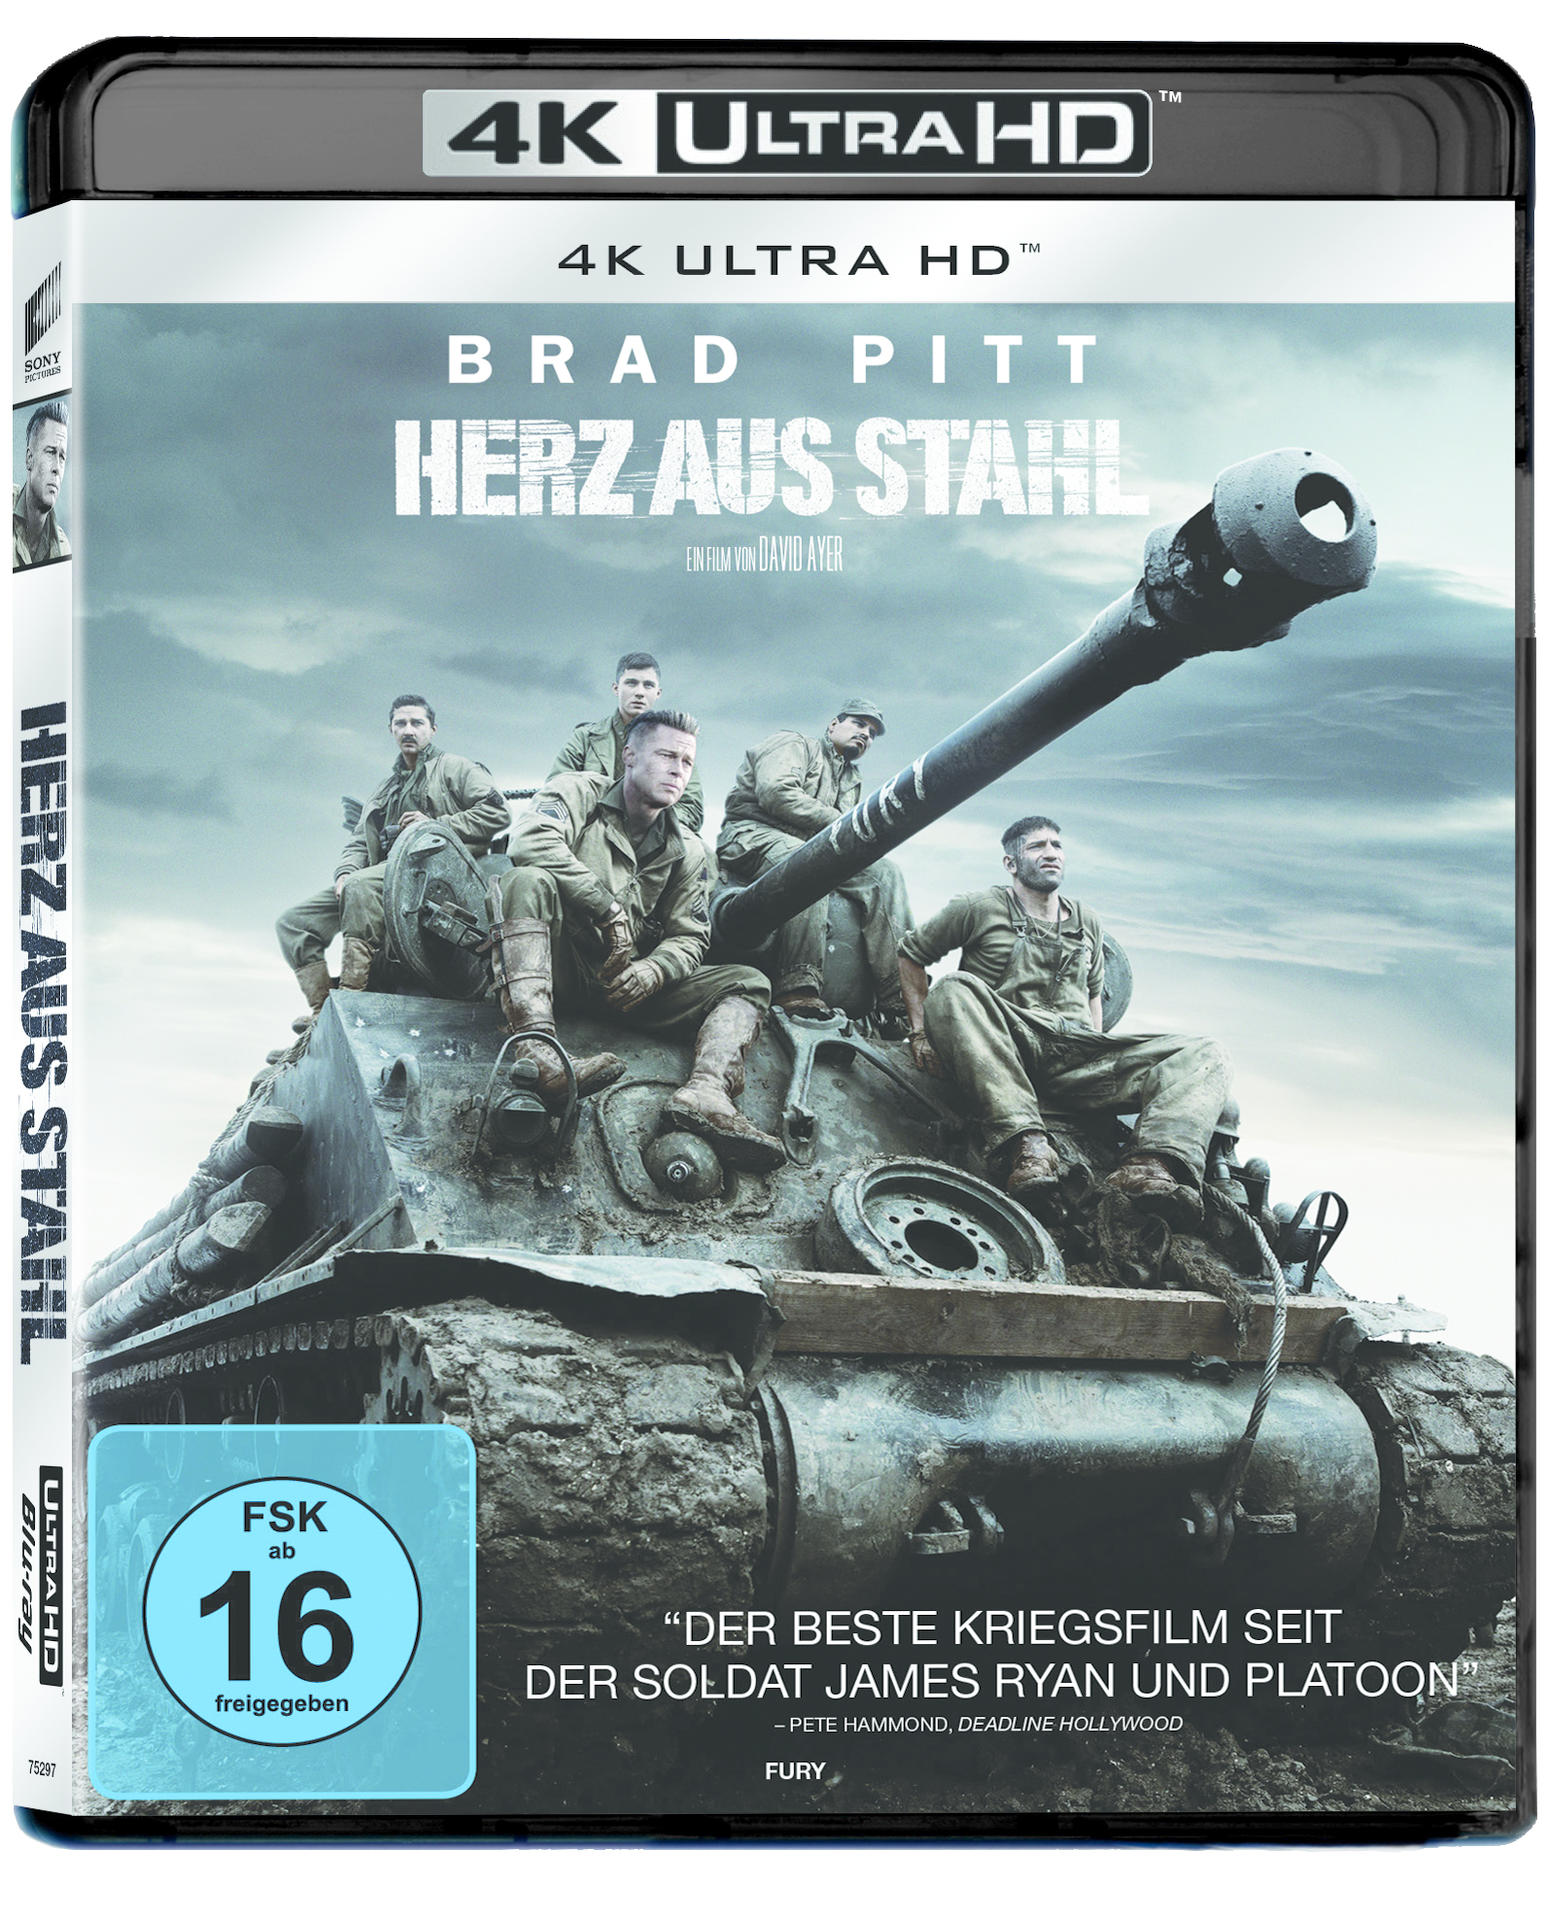 HD 4K Ultra STAHL AUS HERZ Blu-ray